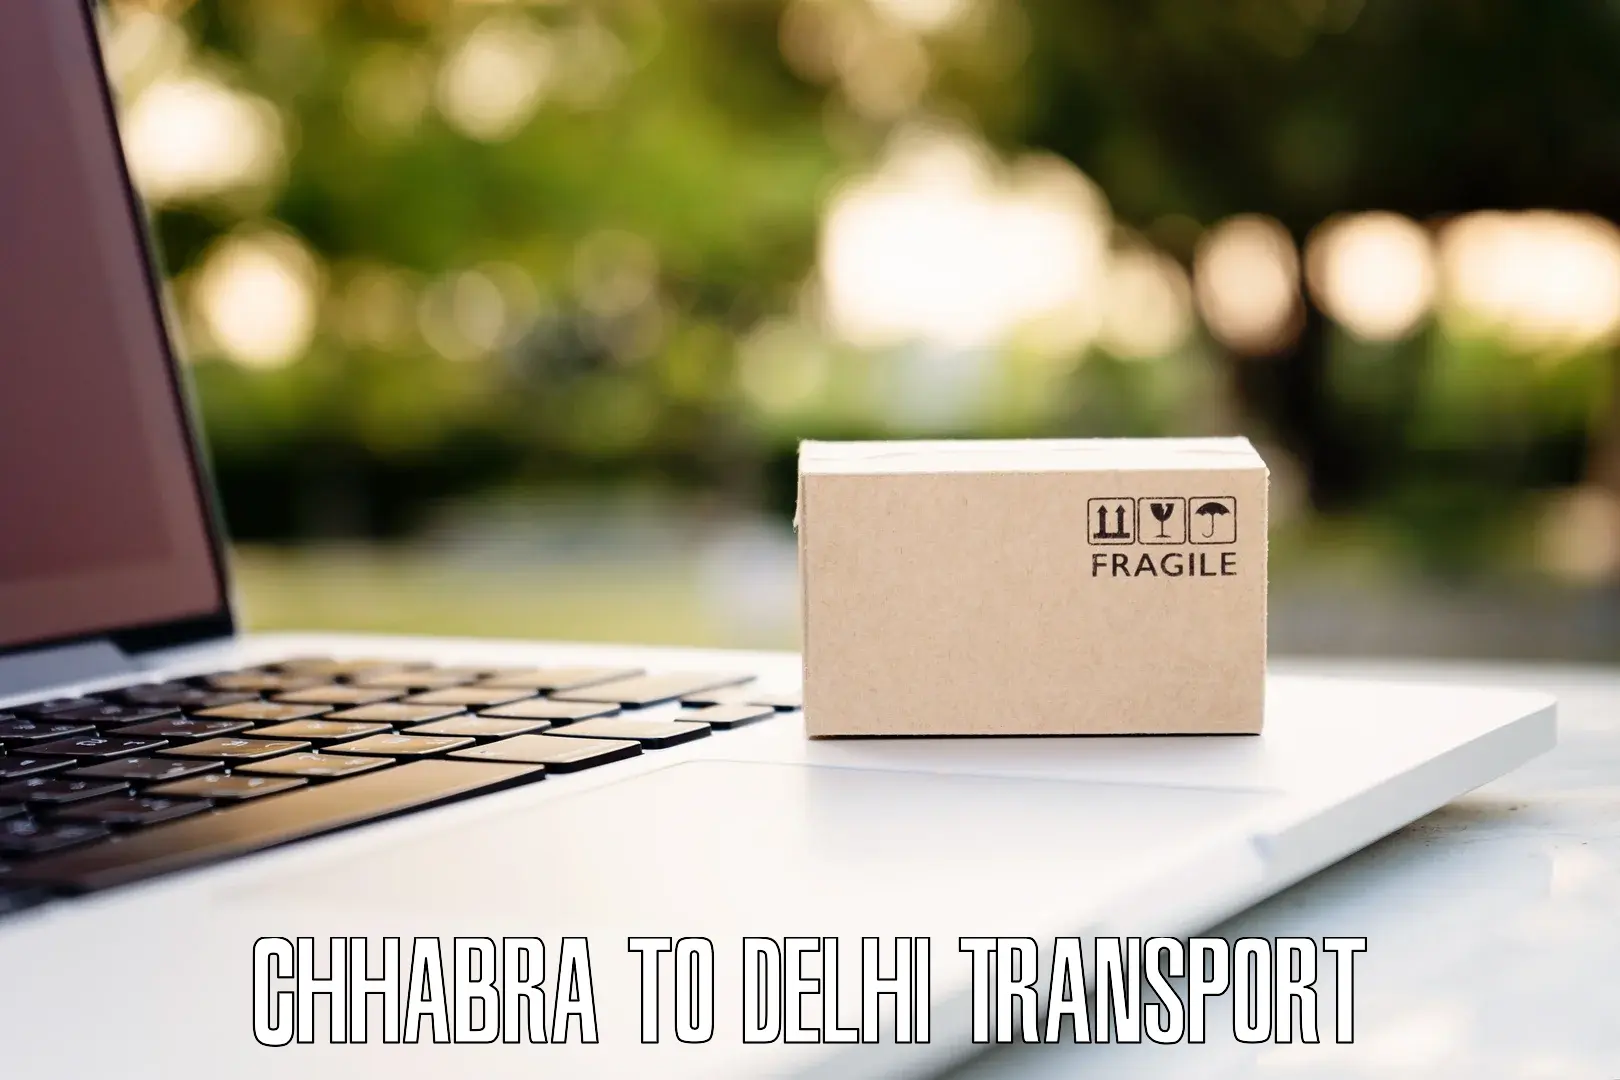 Sending bike to another city Chhabra to Delhi